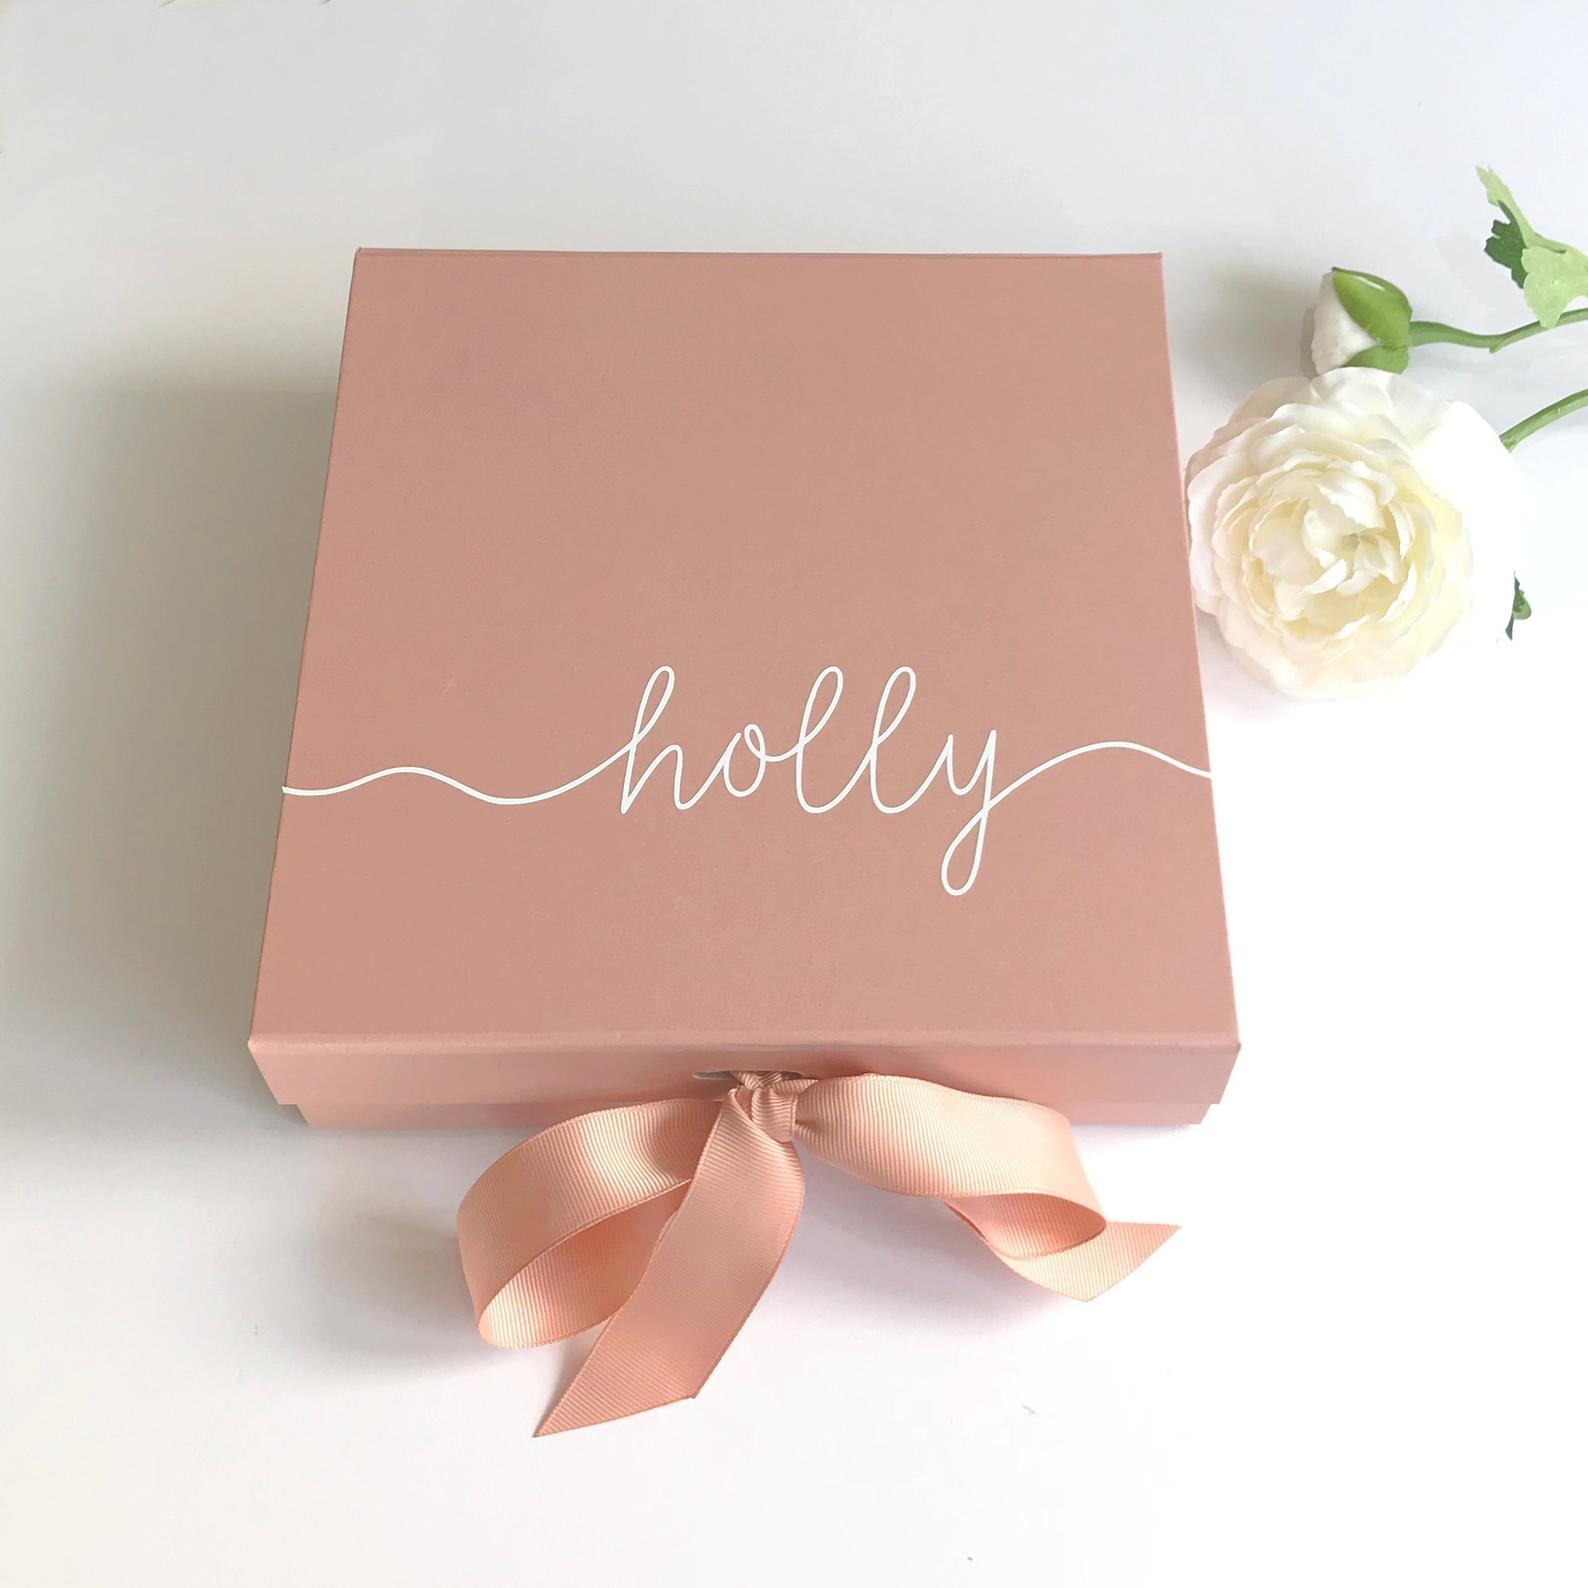 Personalised box bridesmaid proposal gift wedding NorabellaUK